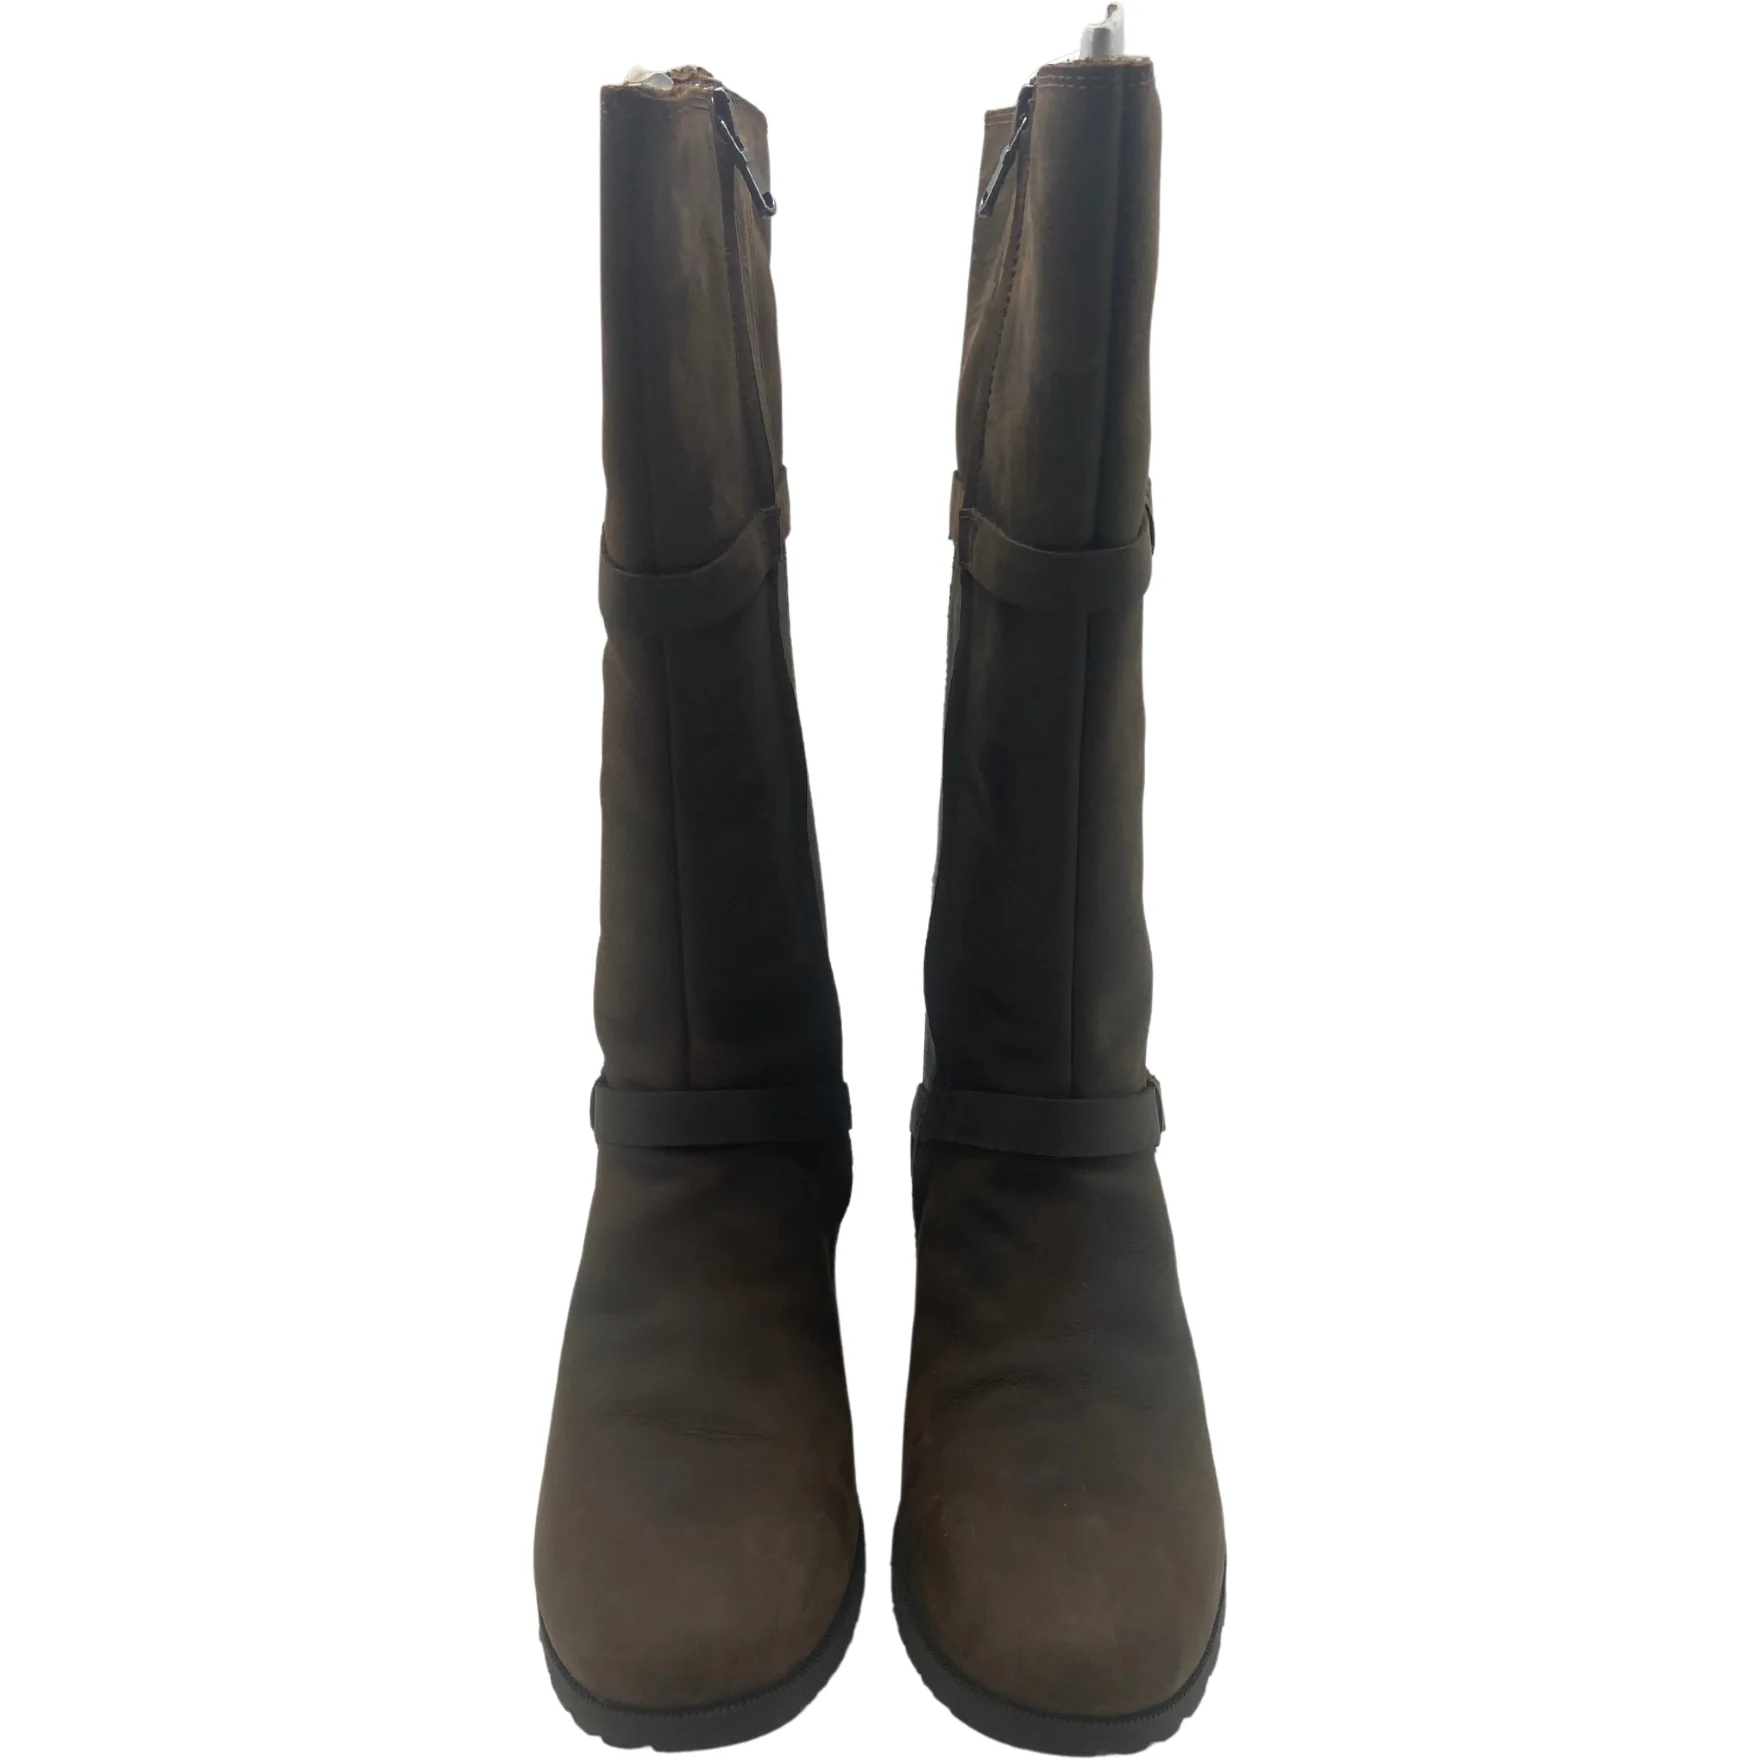 Teva: Womens Boots / Knee High / Delavina / Waterproof / Leather / Brown / Size 7.5